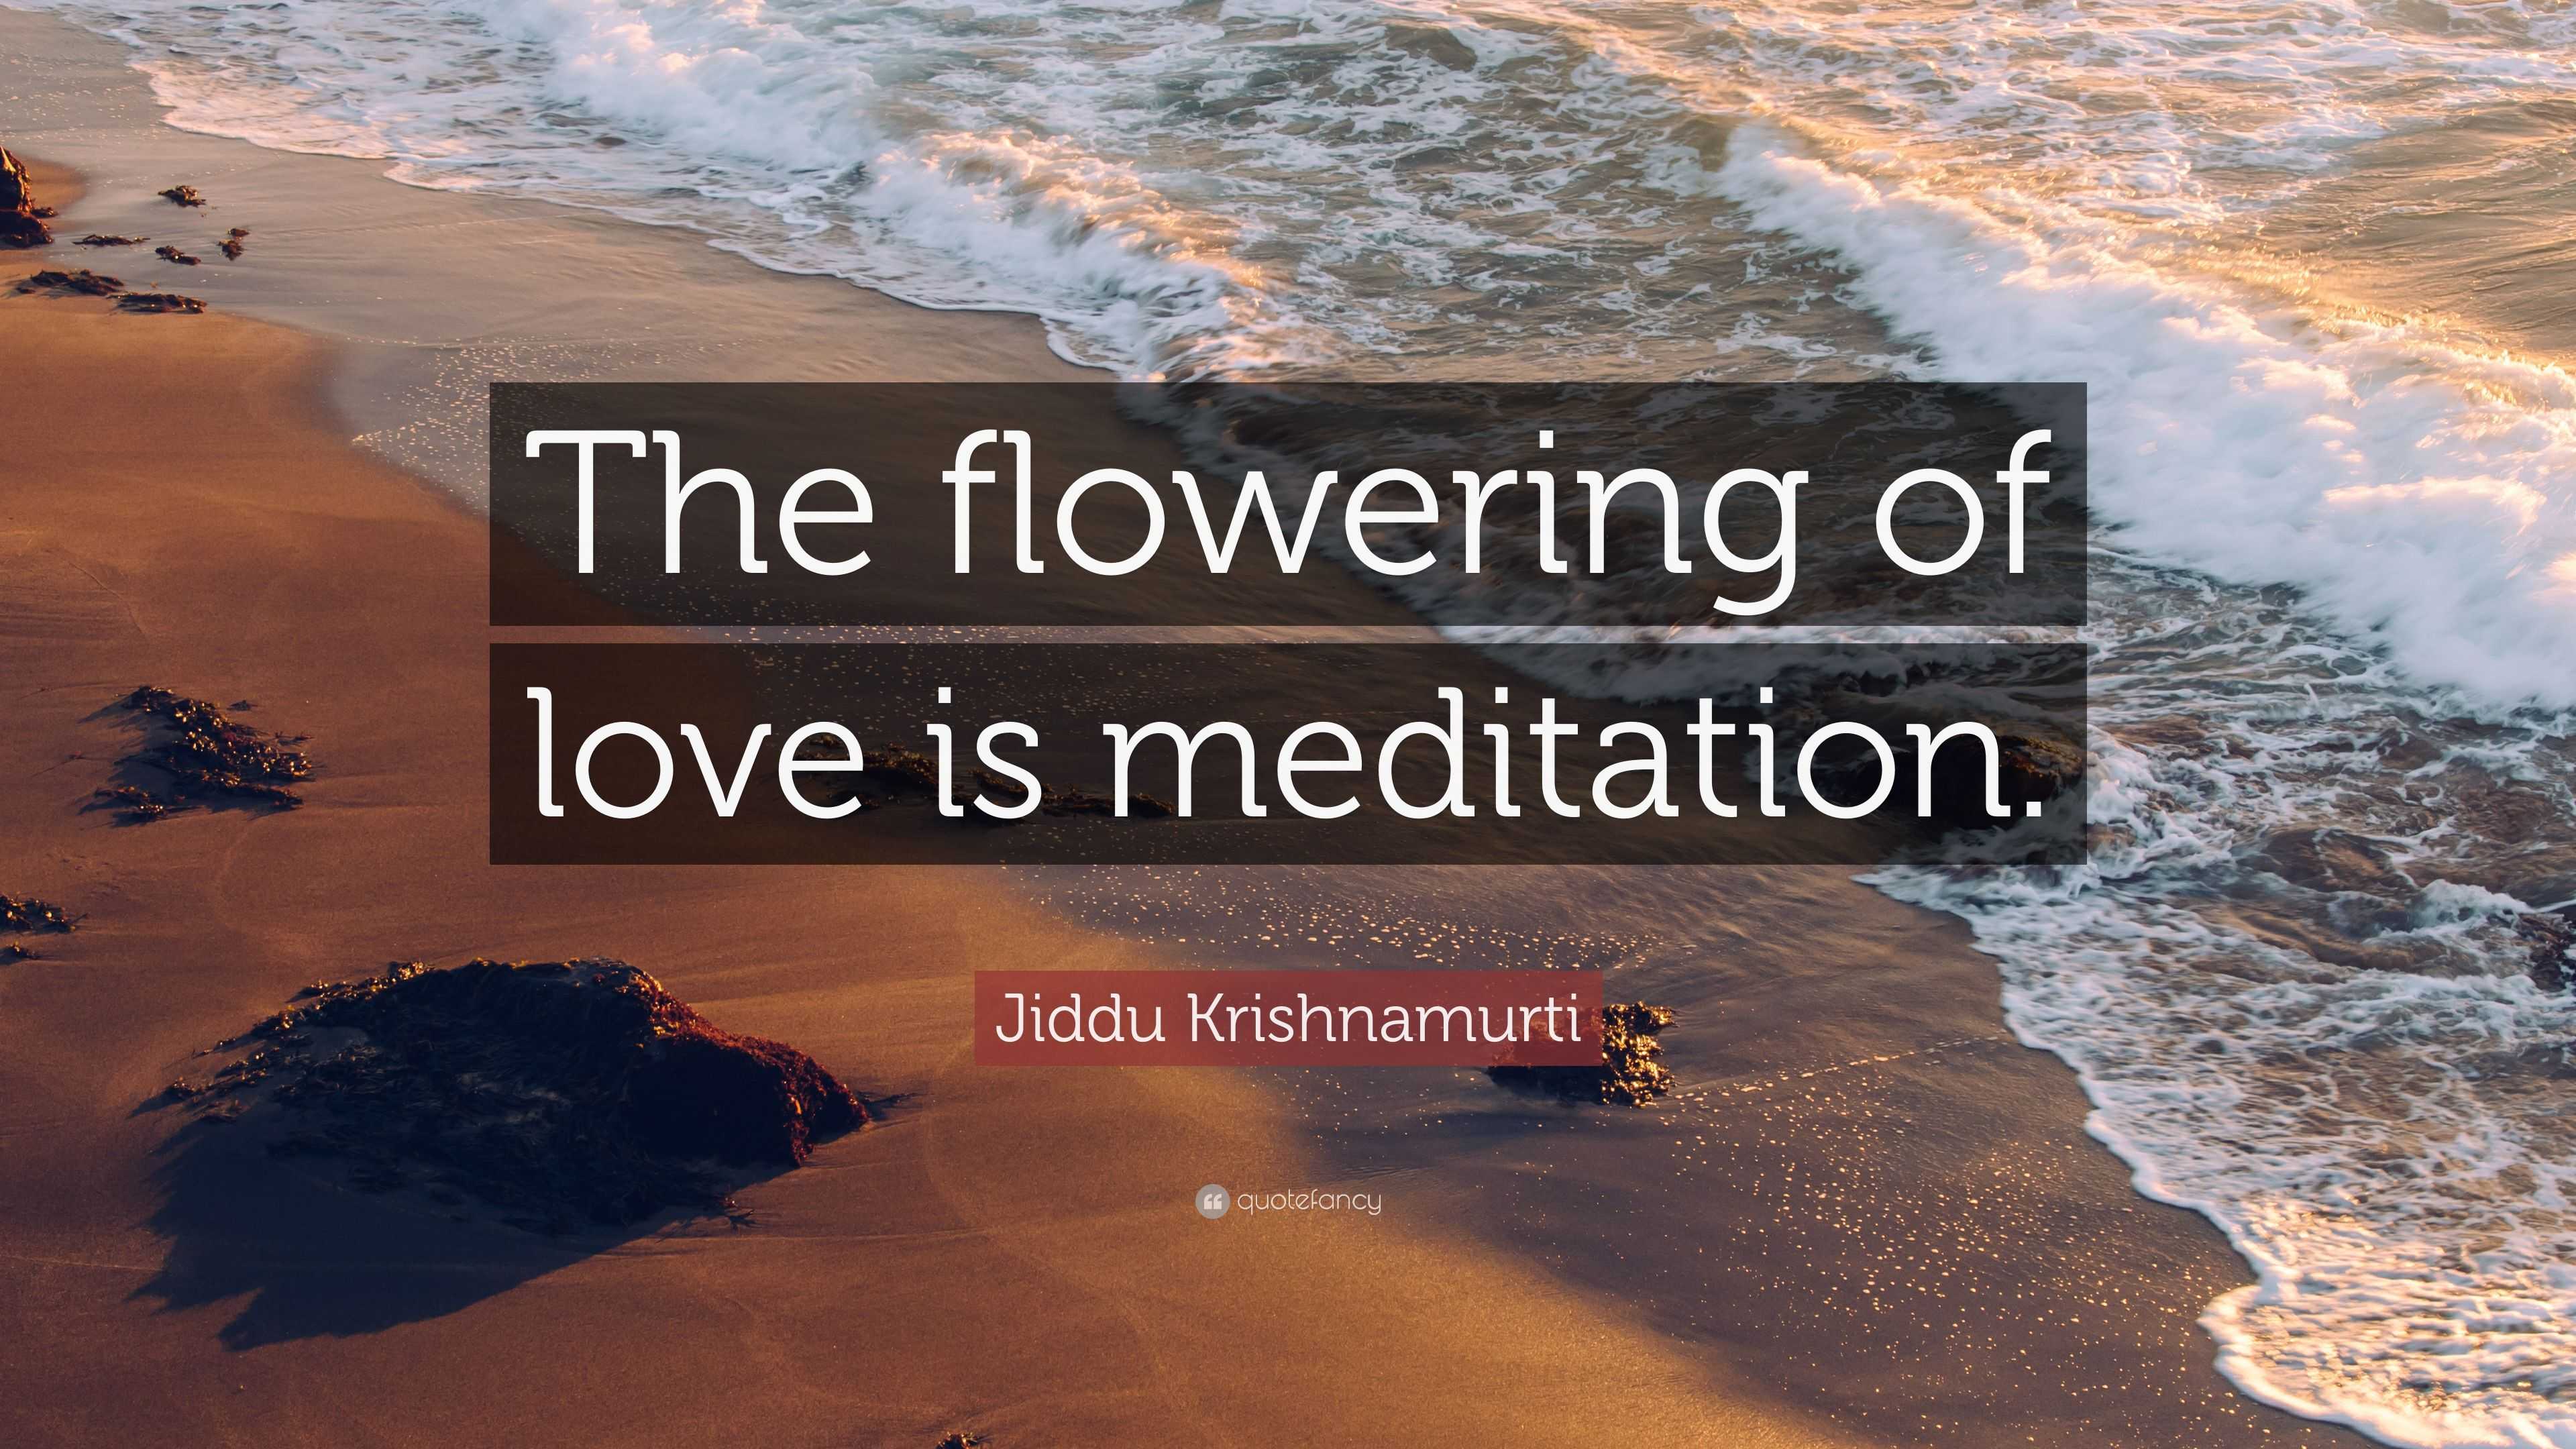 Jiddu Krishnamurti Quote: “The flowering of love is meditation.”